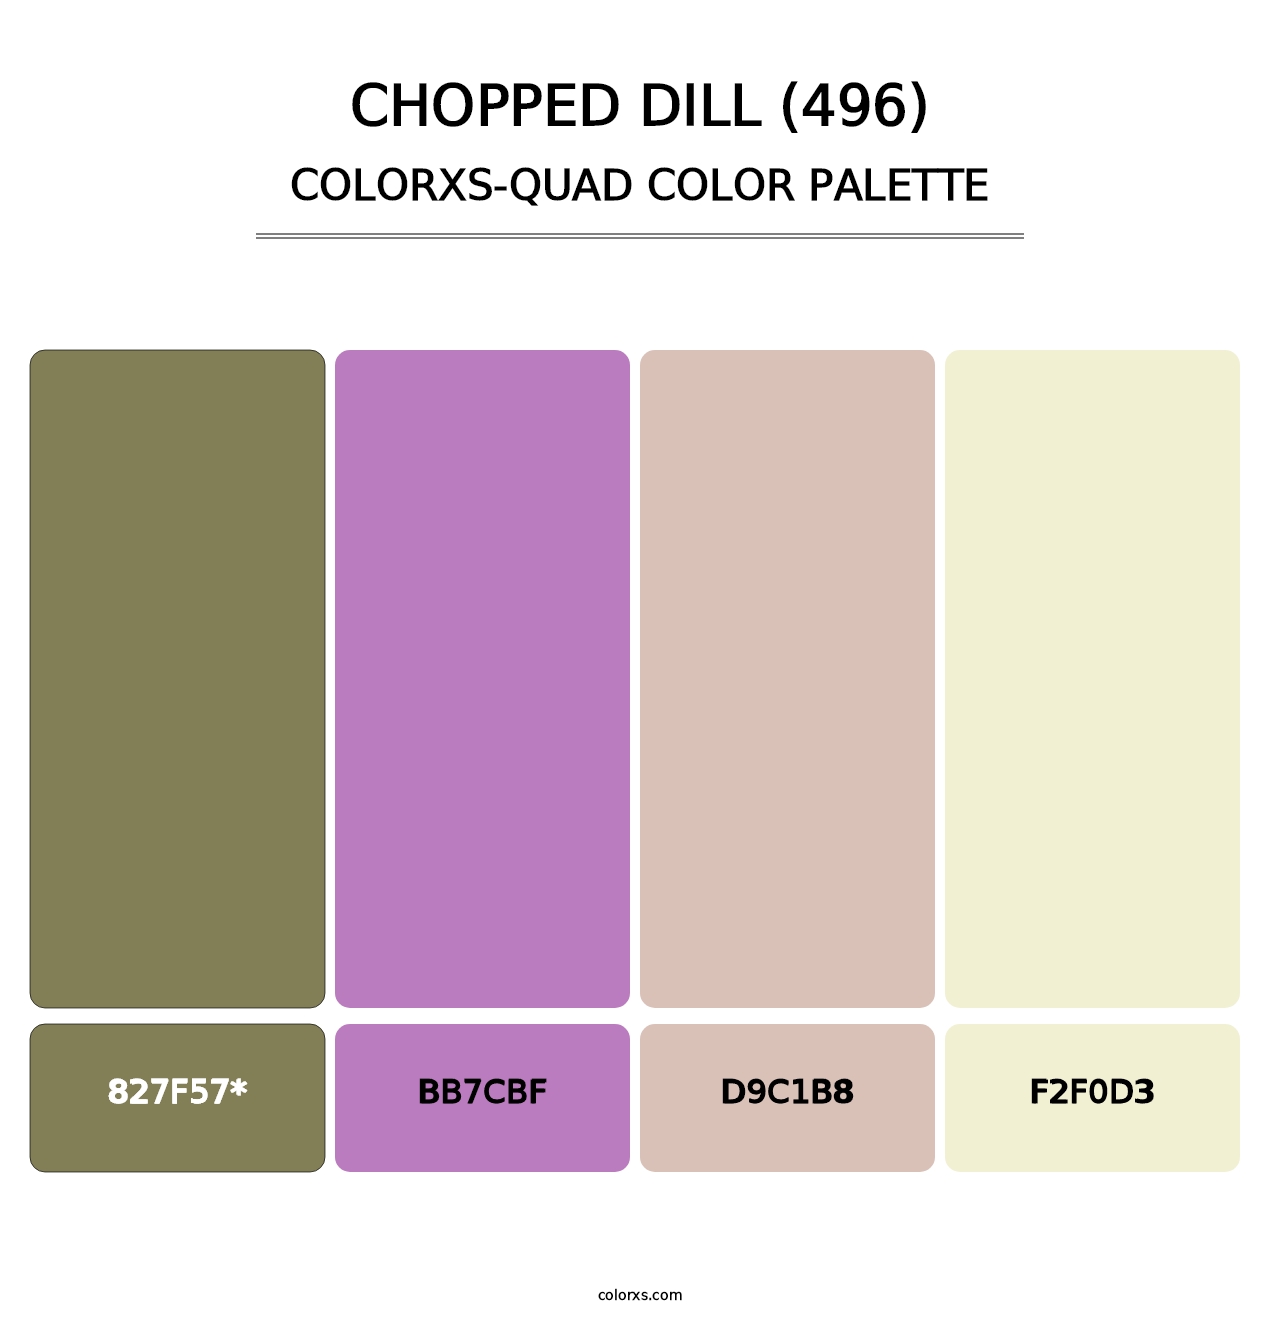 Chopped Dill (496) - Colorxs Quad Palette